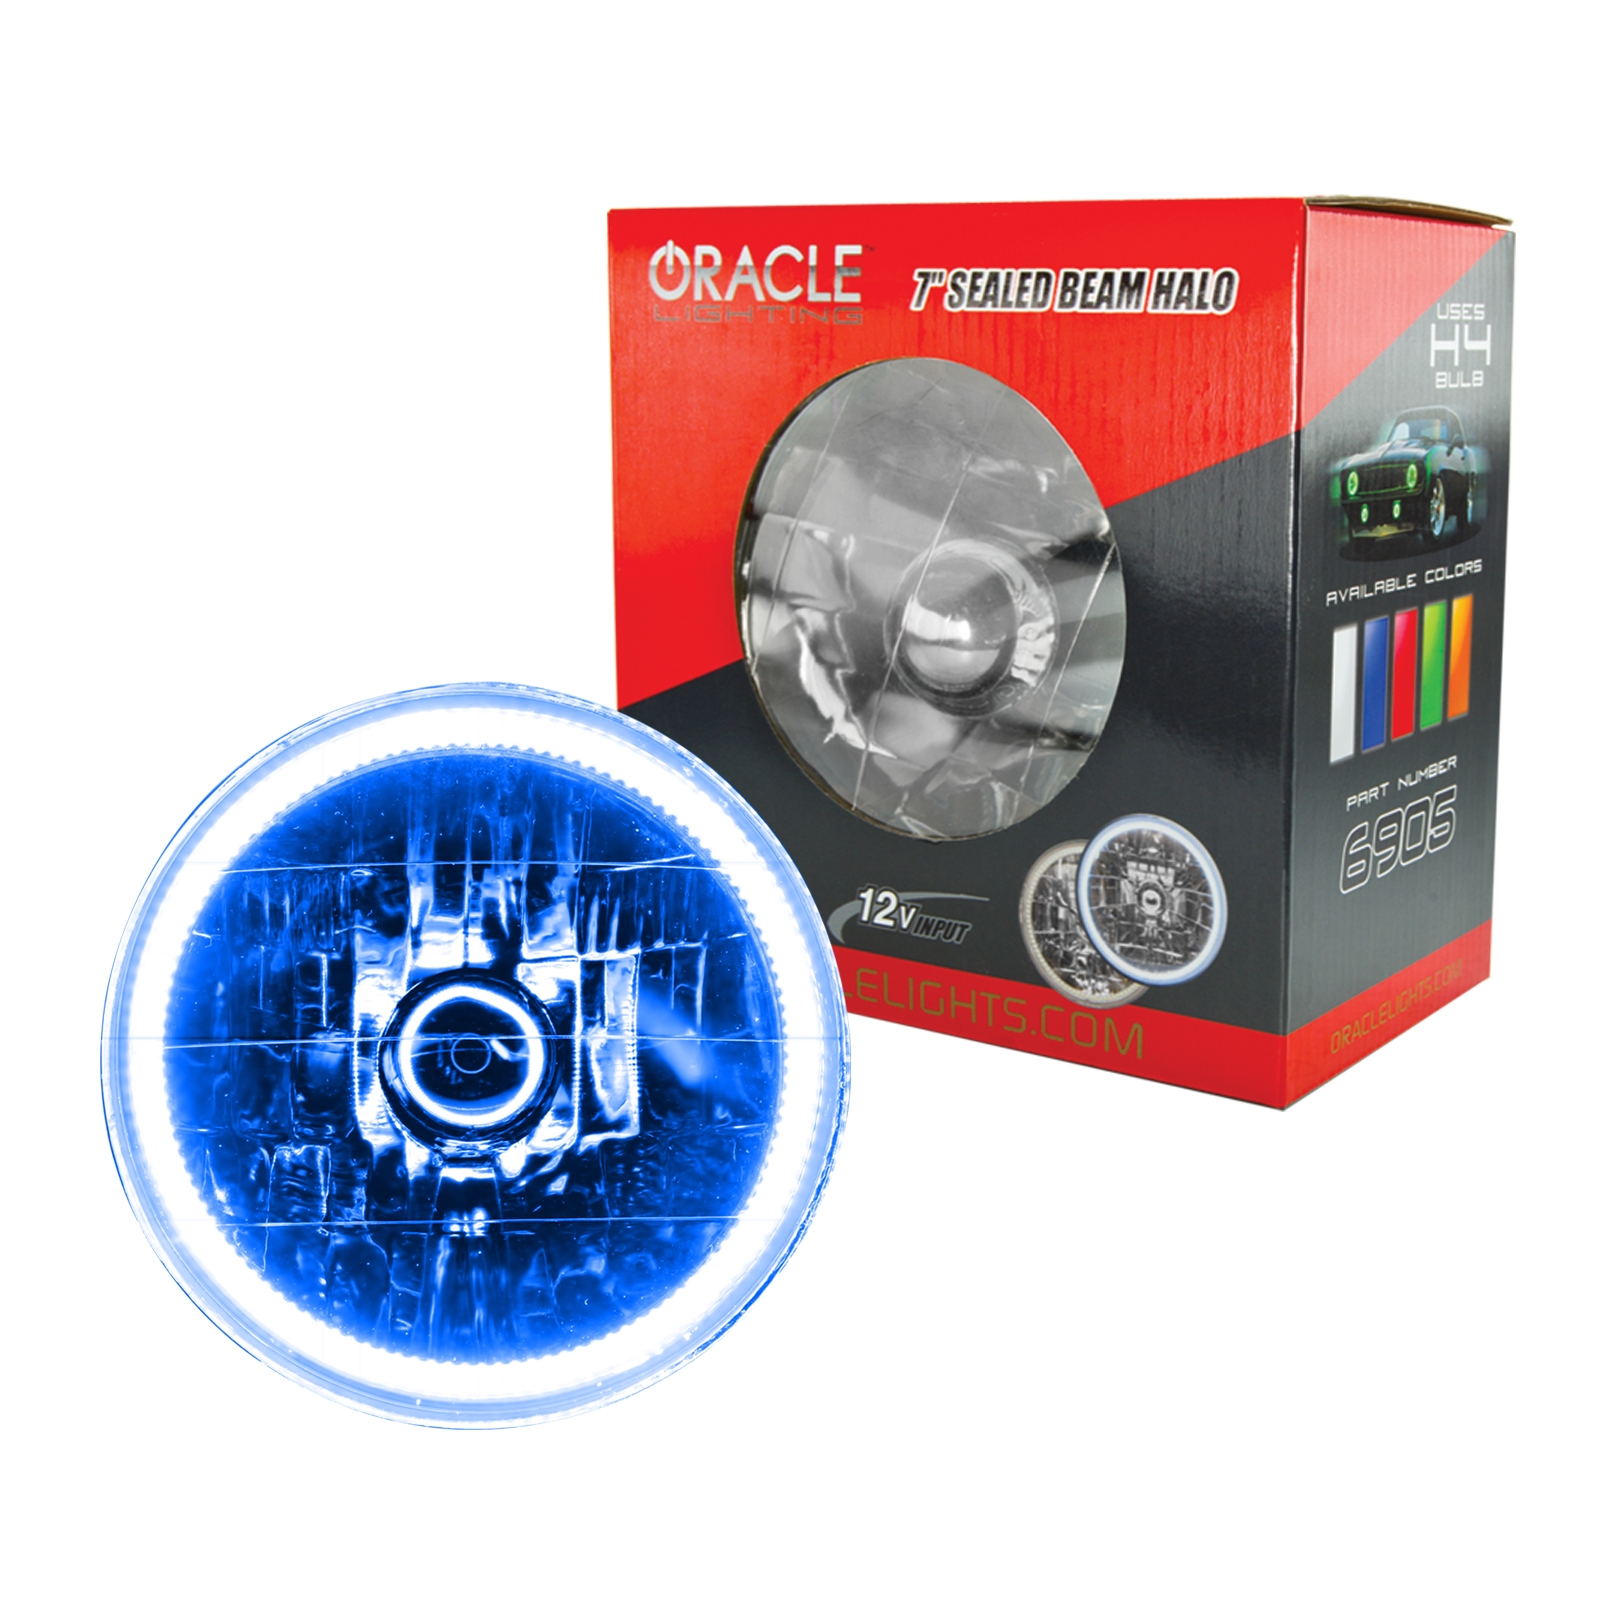 Oracle Halo H4 Conversion Headlight 7, Blue, FQCV-6905-002